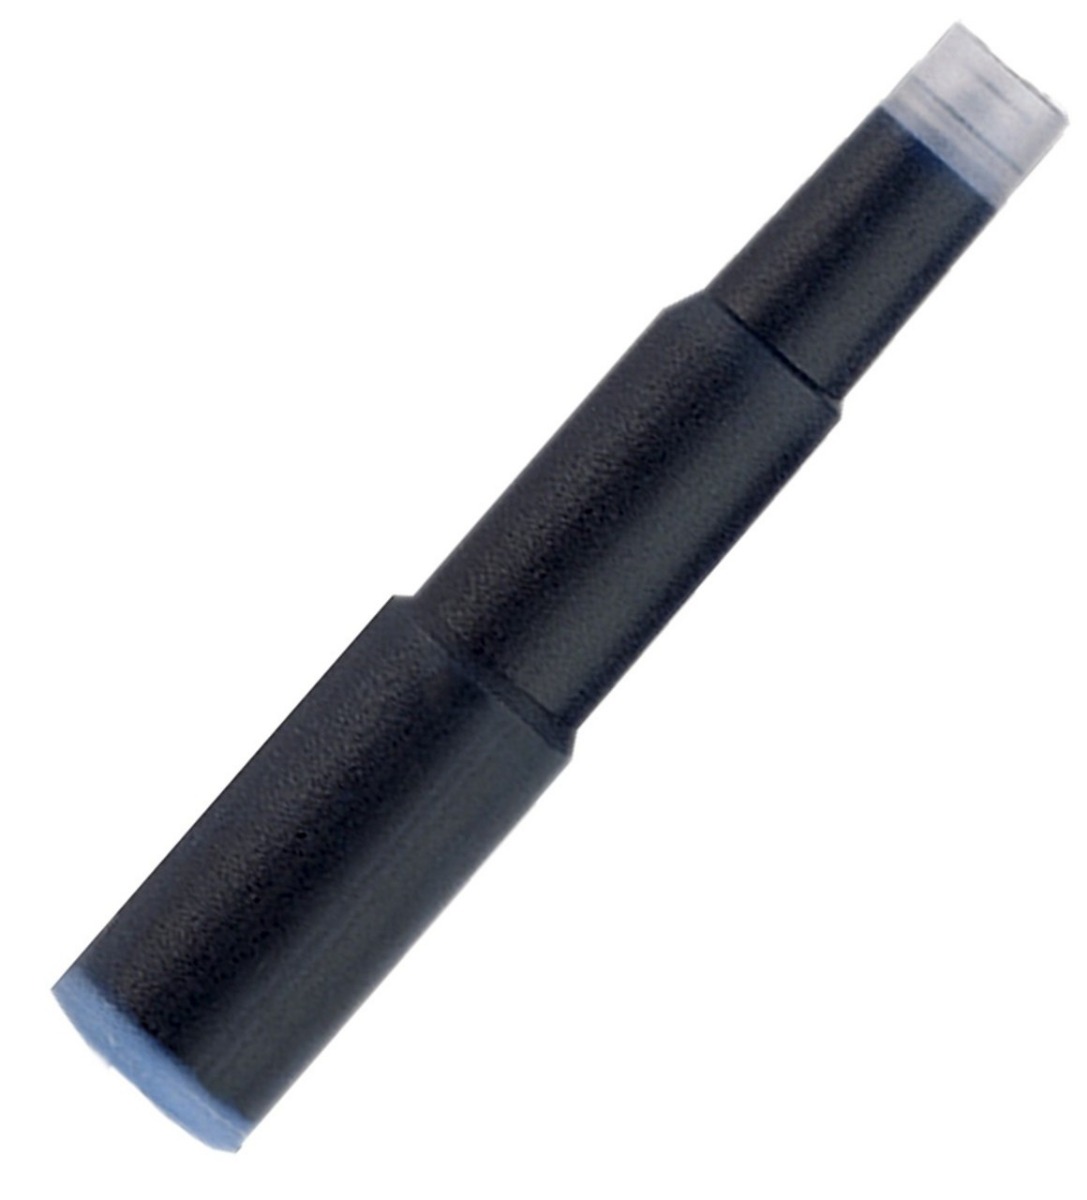 Cross Model: 11403 Transparent body  Blue ink cartridge